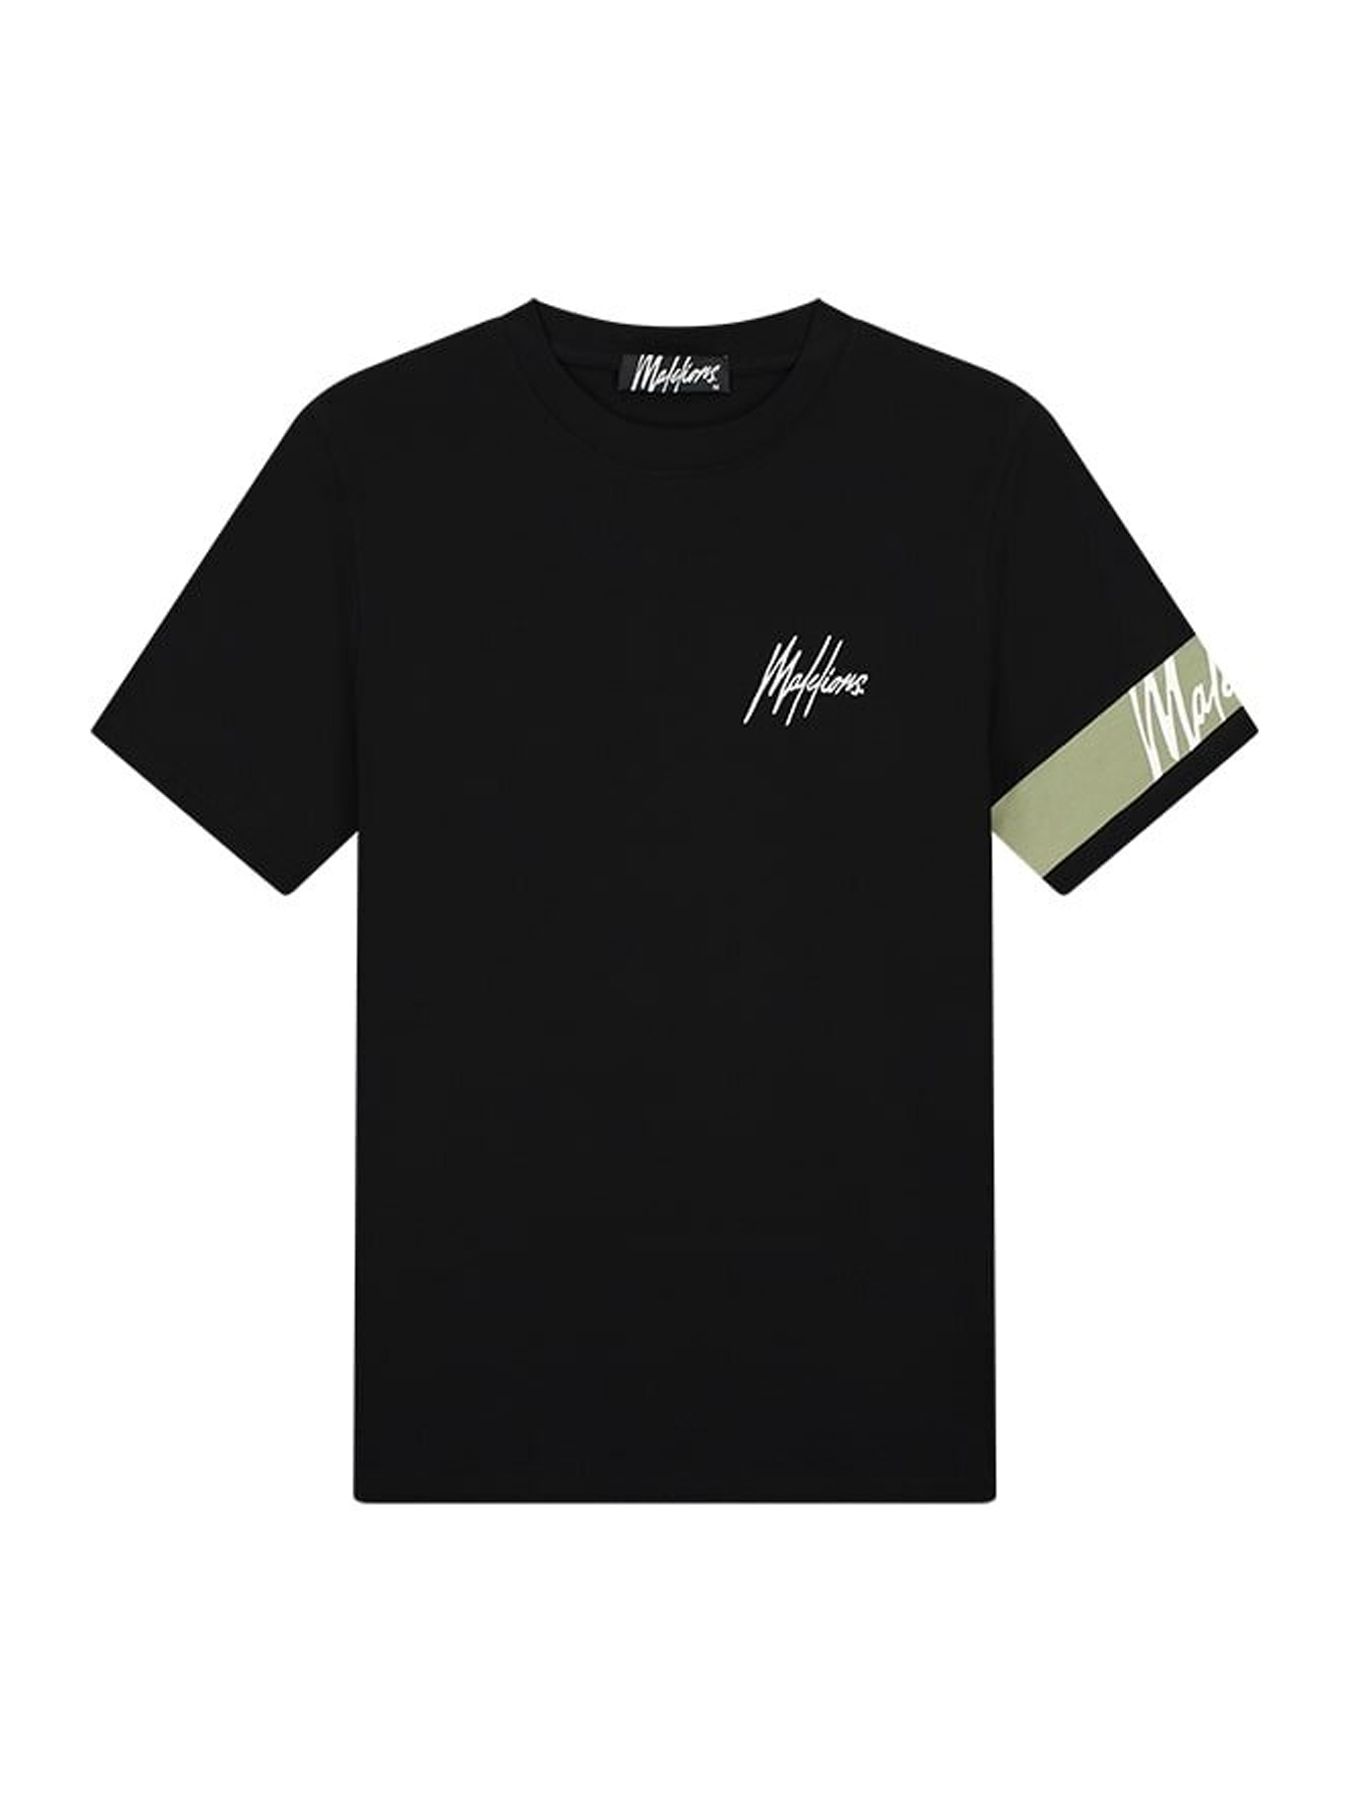 Malelions Men Captain t-shirt Black/Sage green 00108669-930